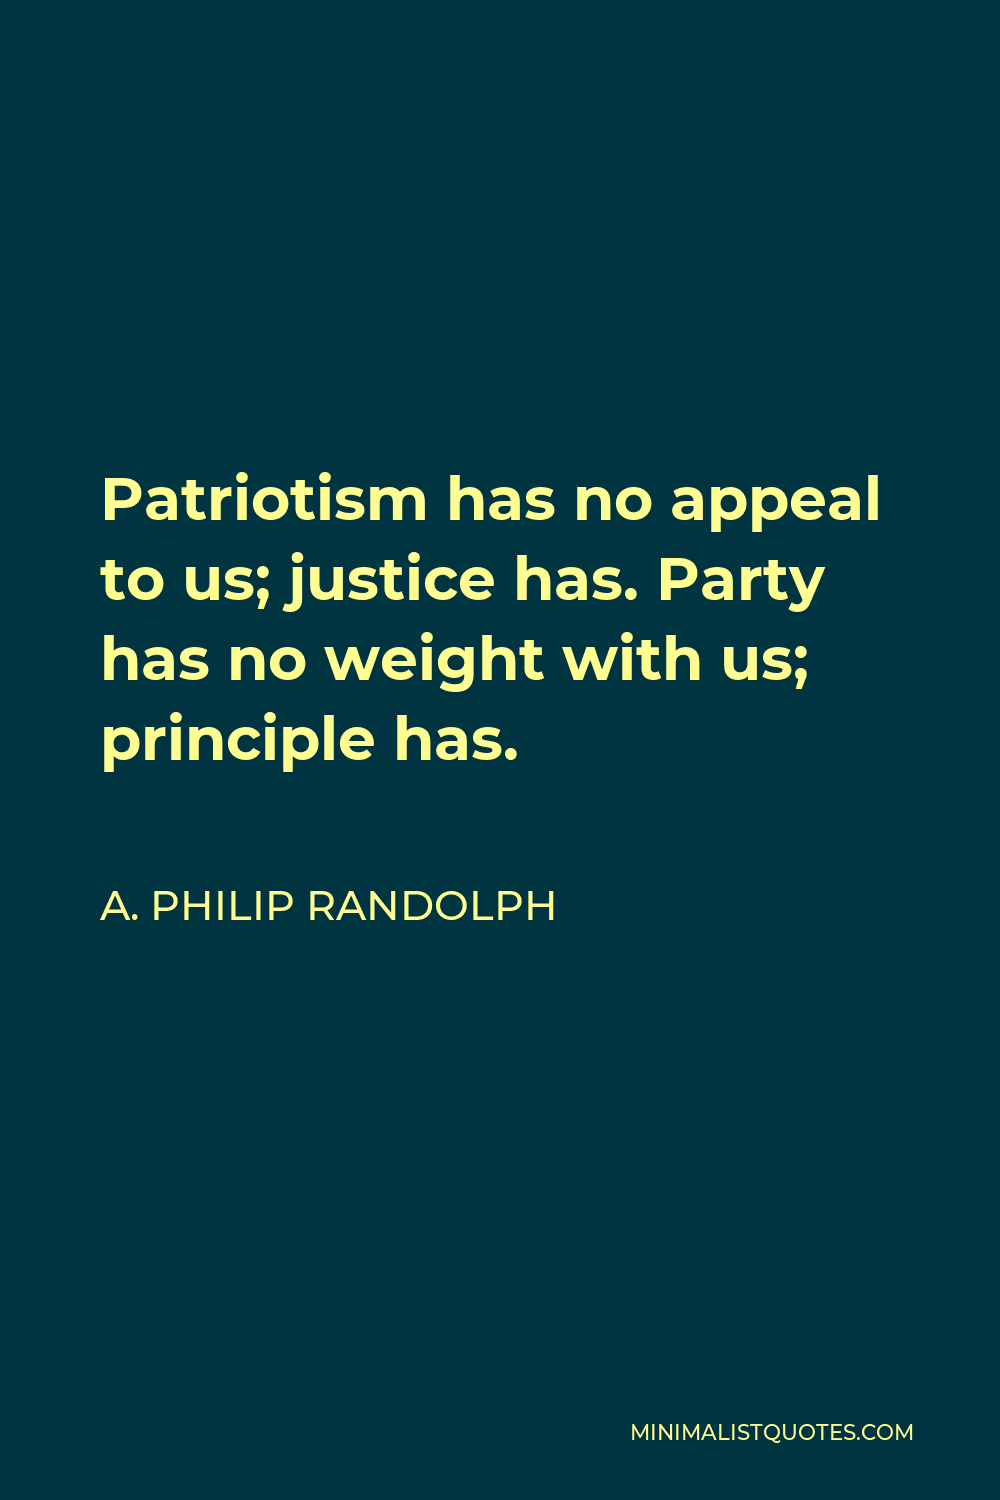 A. Philip Randolph Quote - Patriotism has no appeal to us; justice has. Party has no weight with us; principle has.